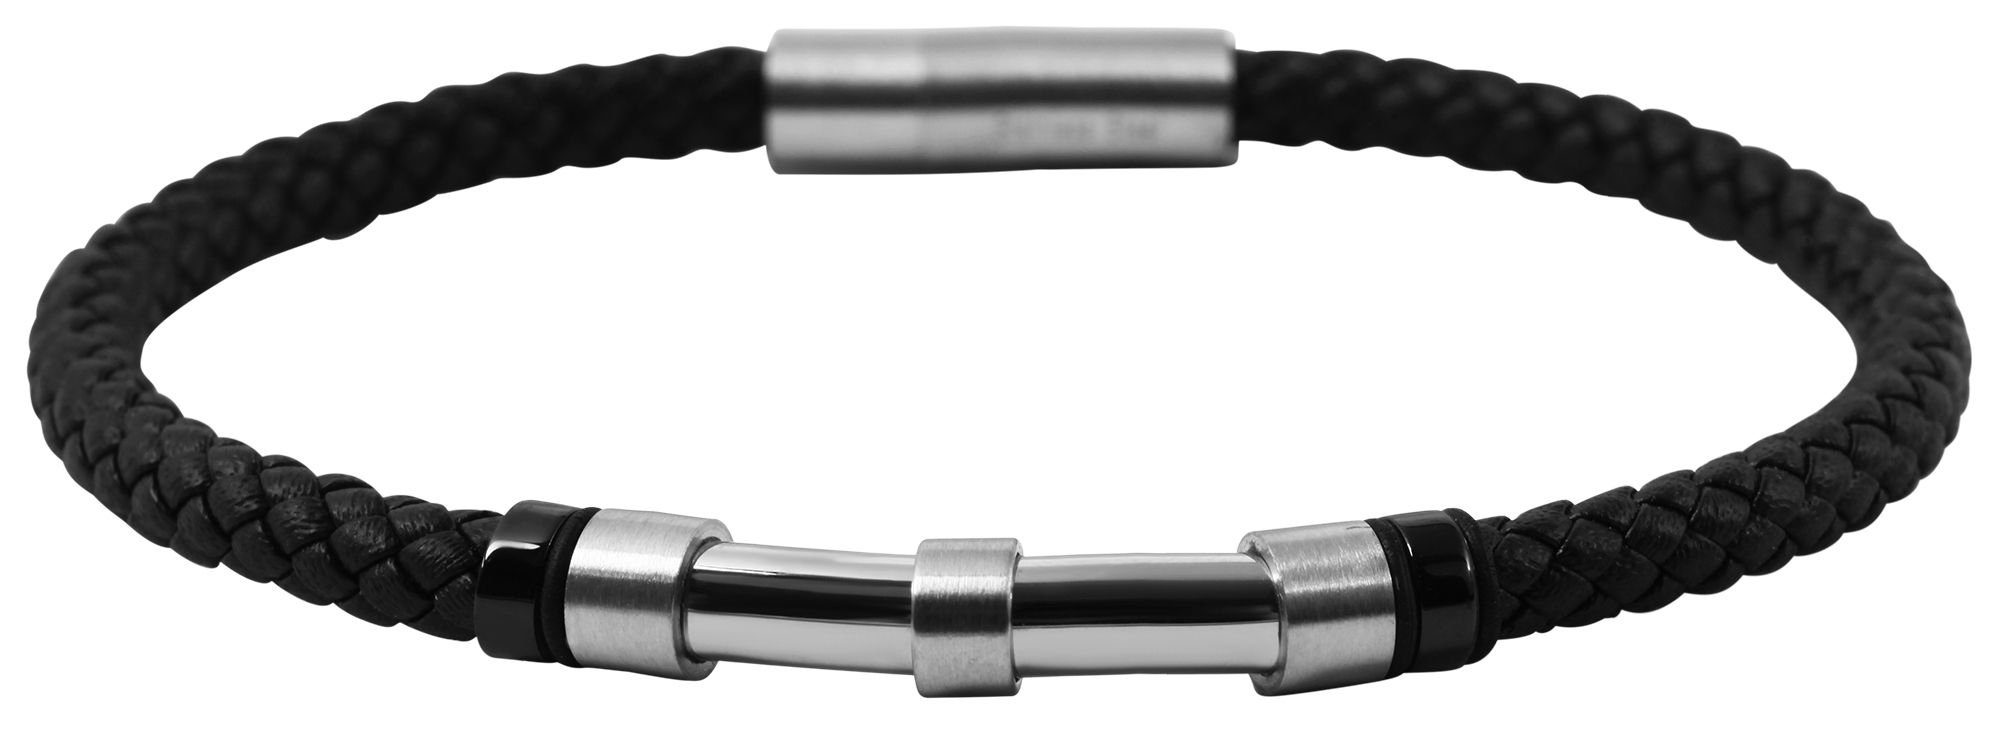 AKZENT Lederarmband Tansila Armband aus Echtleder geflochten mit Edelstahlelement Schwarz (einzeln)